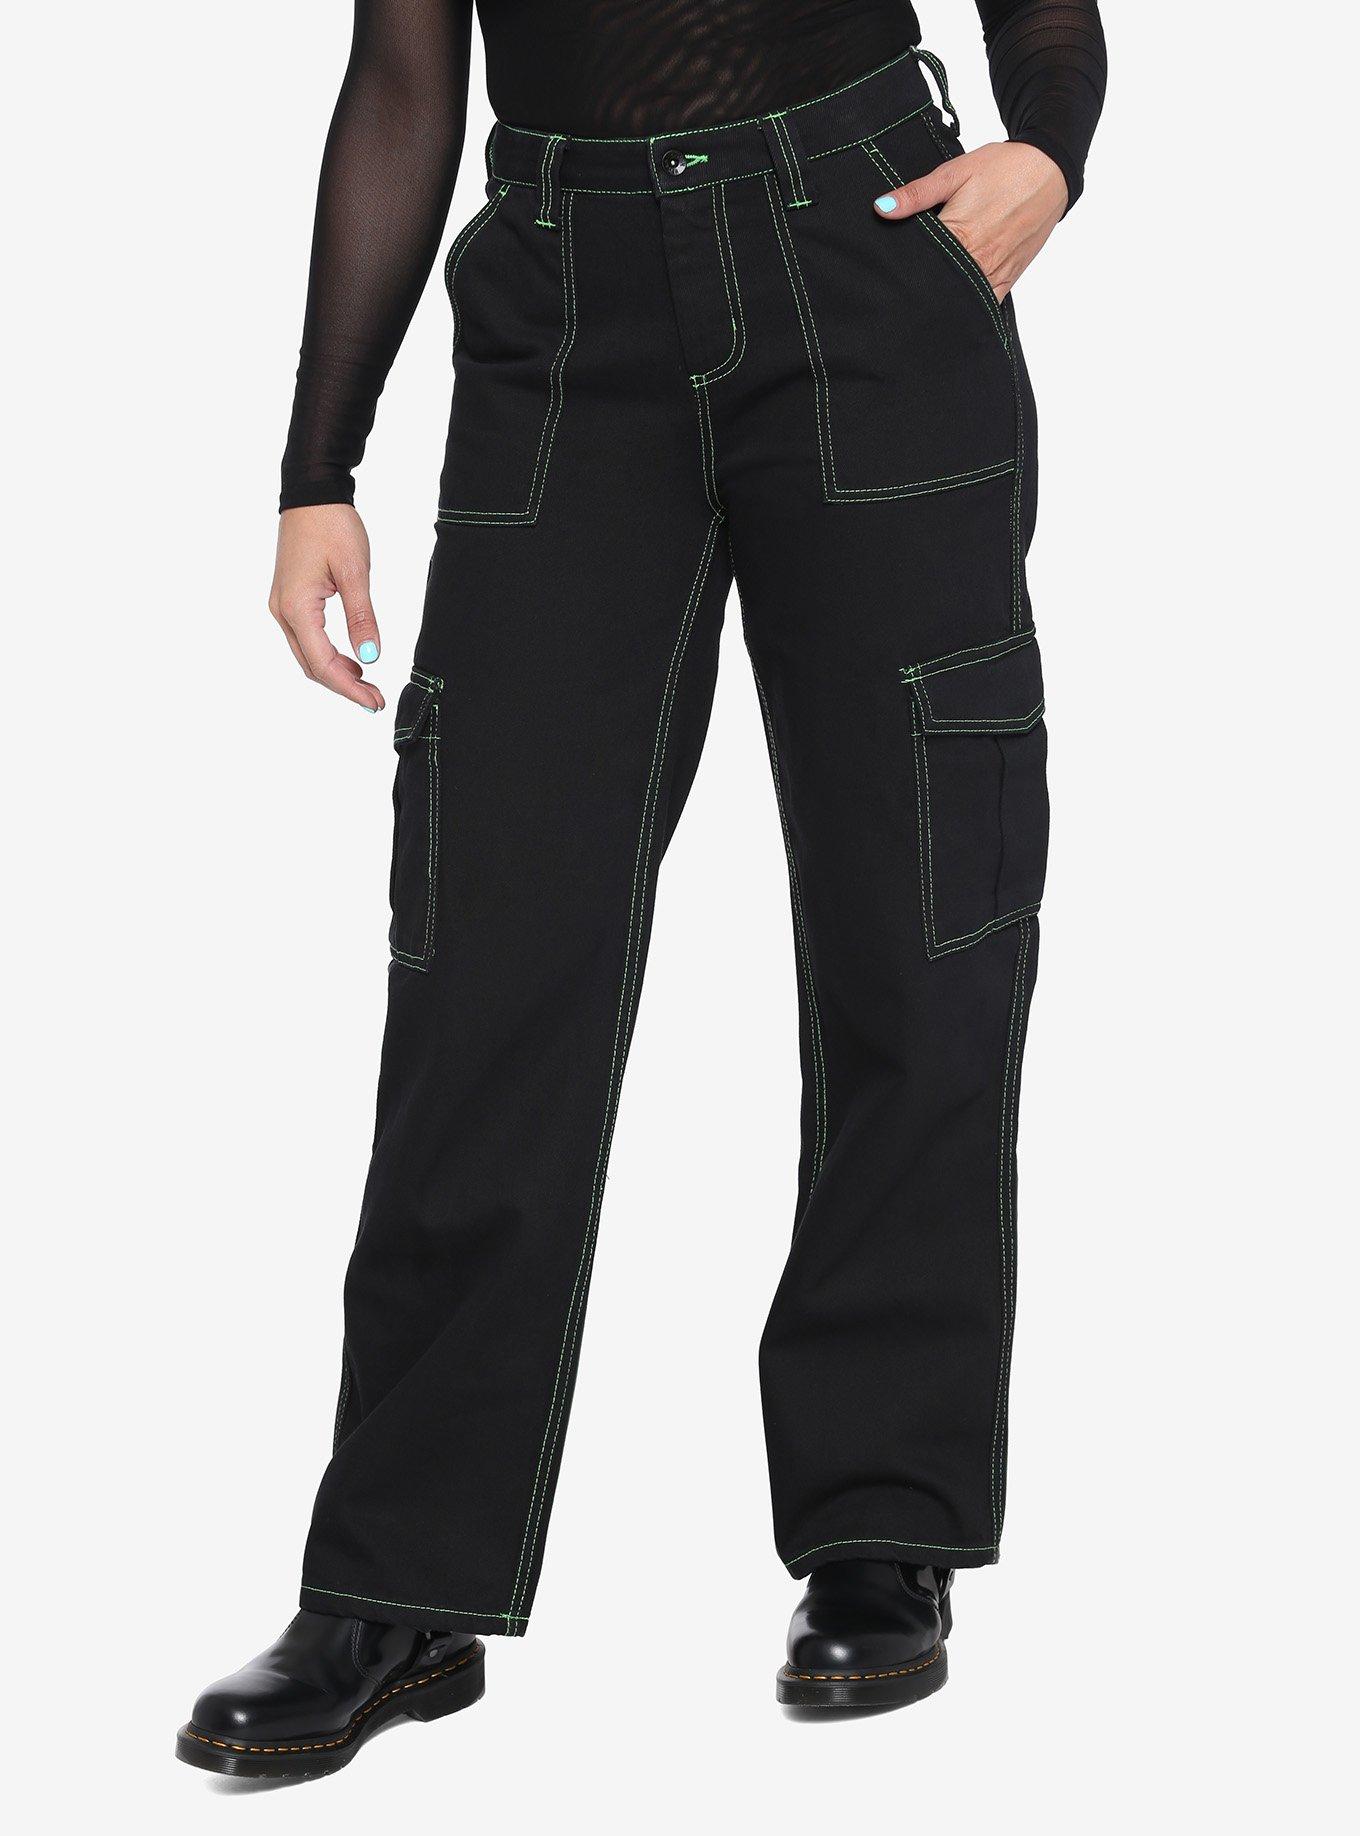 Hot Topic Black & White Contrast Stitch Suspender Carpenter Pants Plus